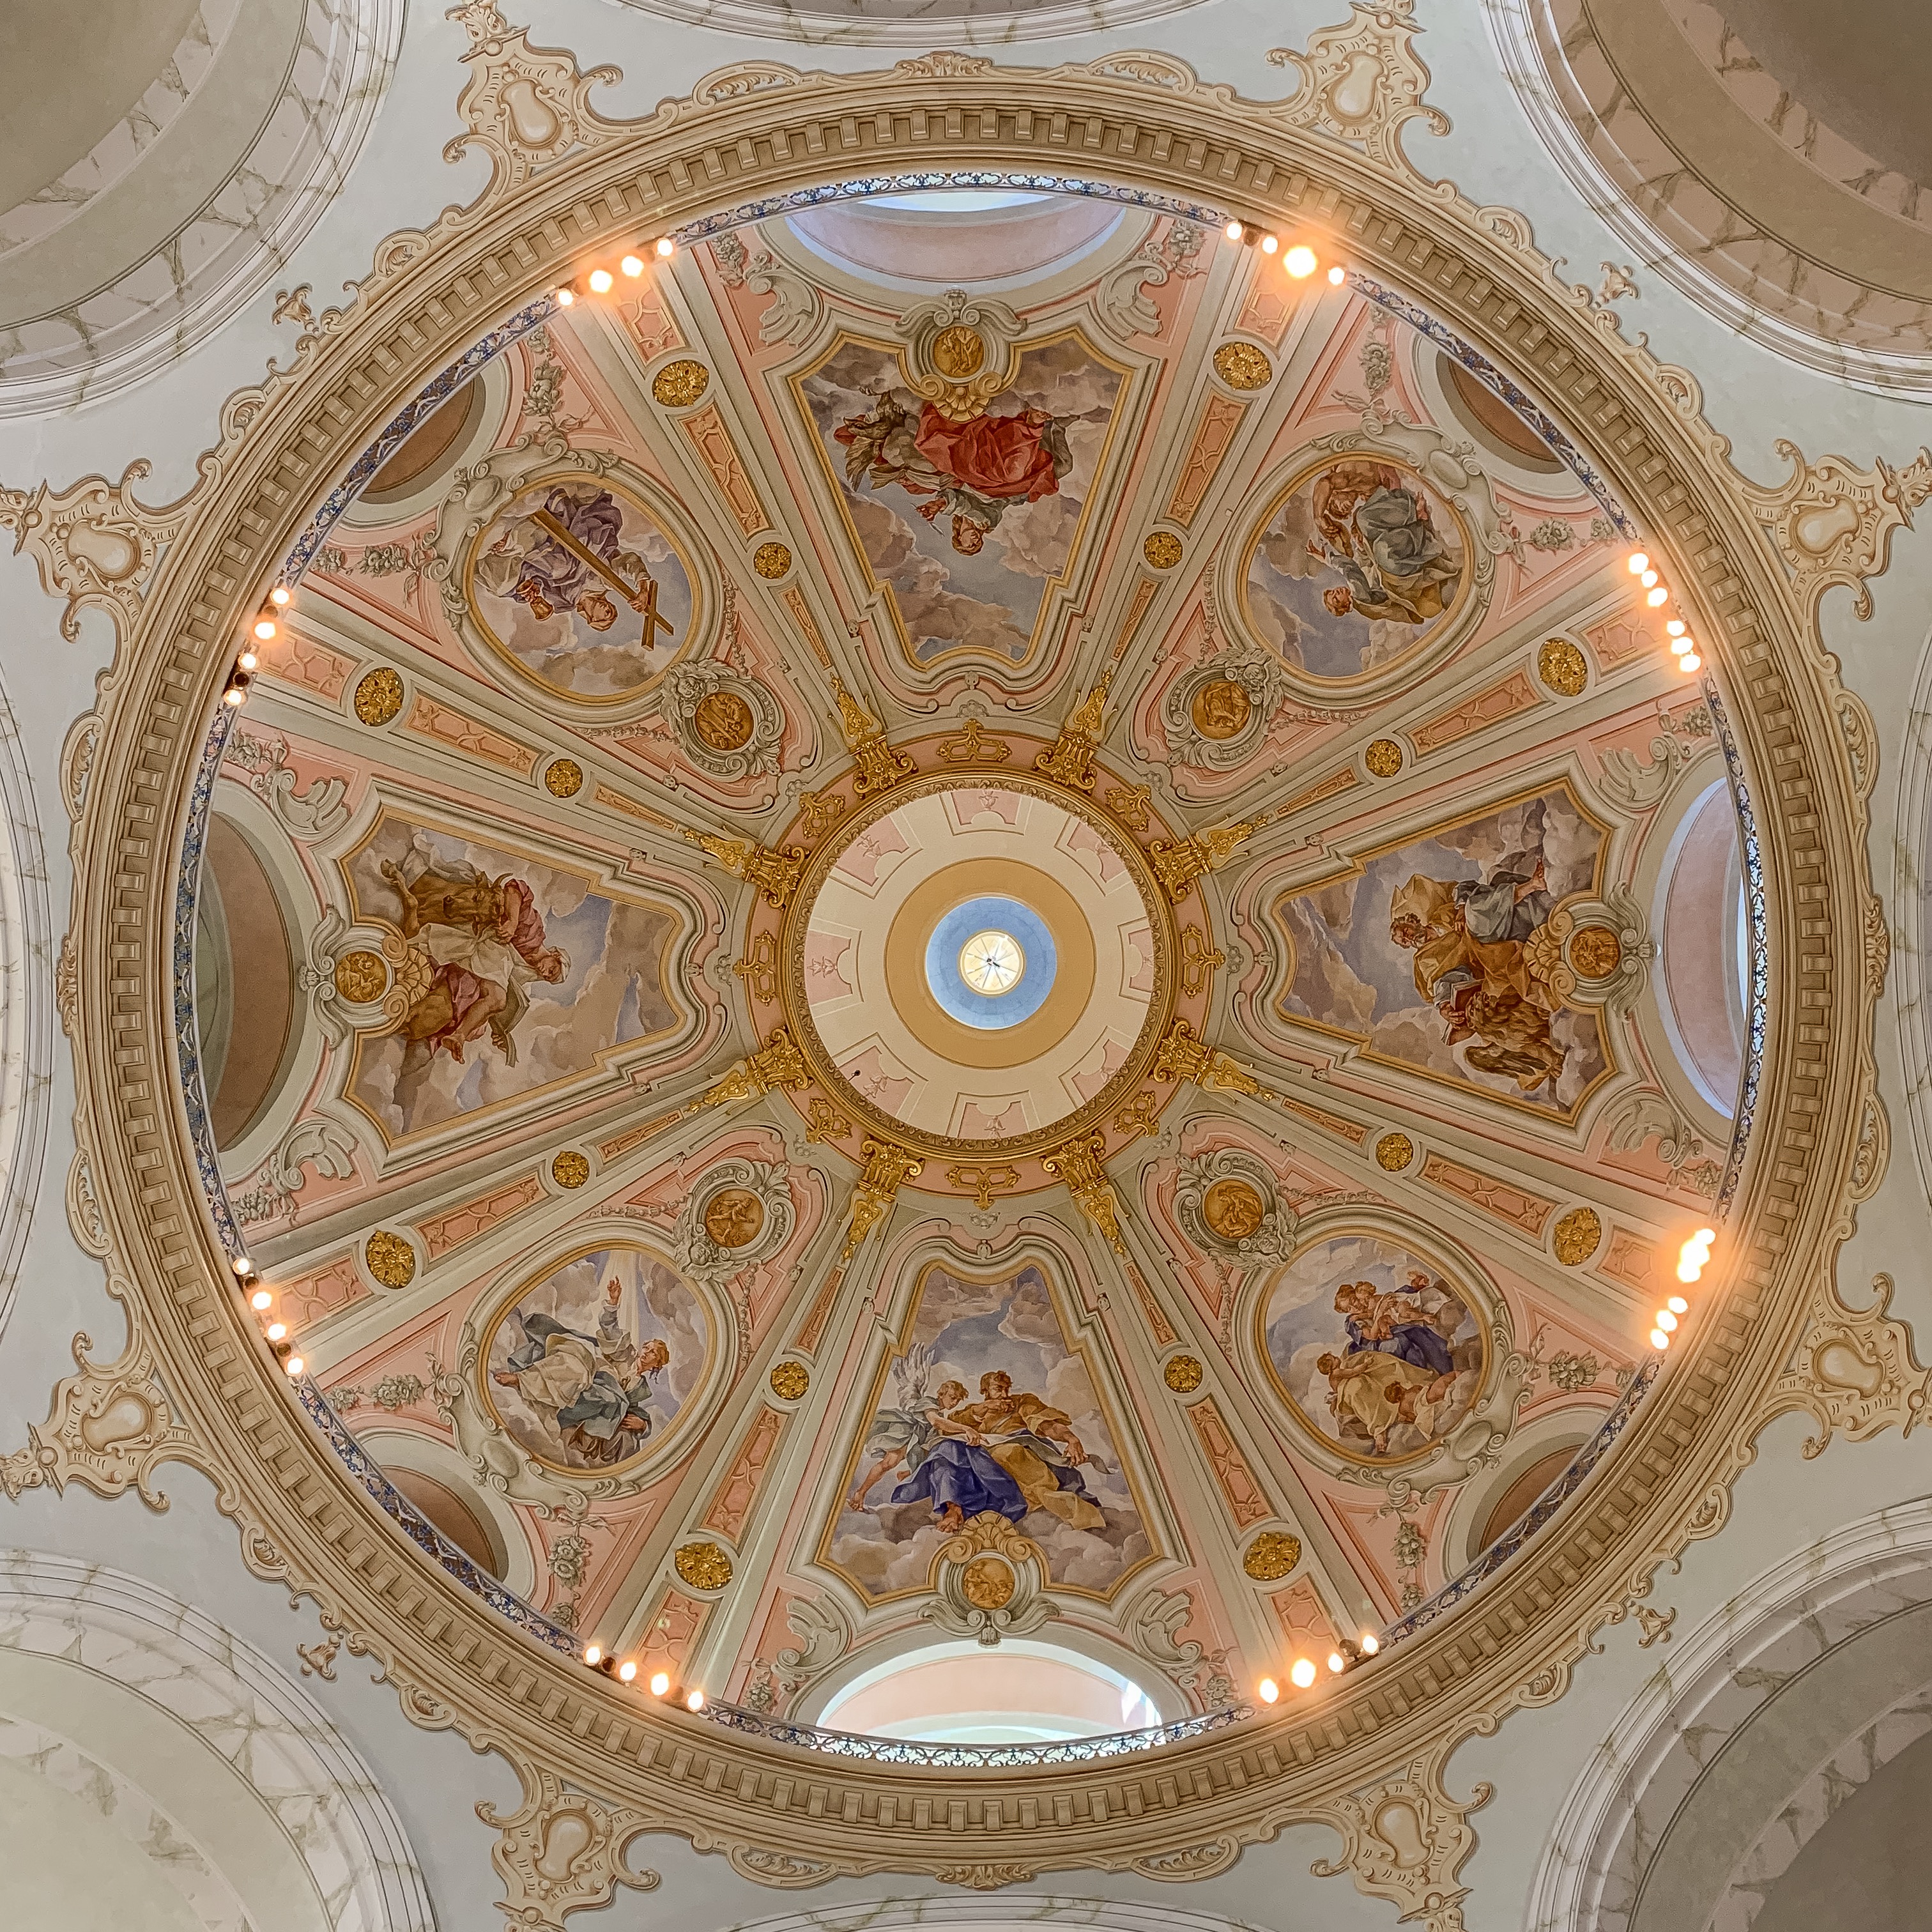 Frauenkirche mennyezet / Frauenkirche ceiling